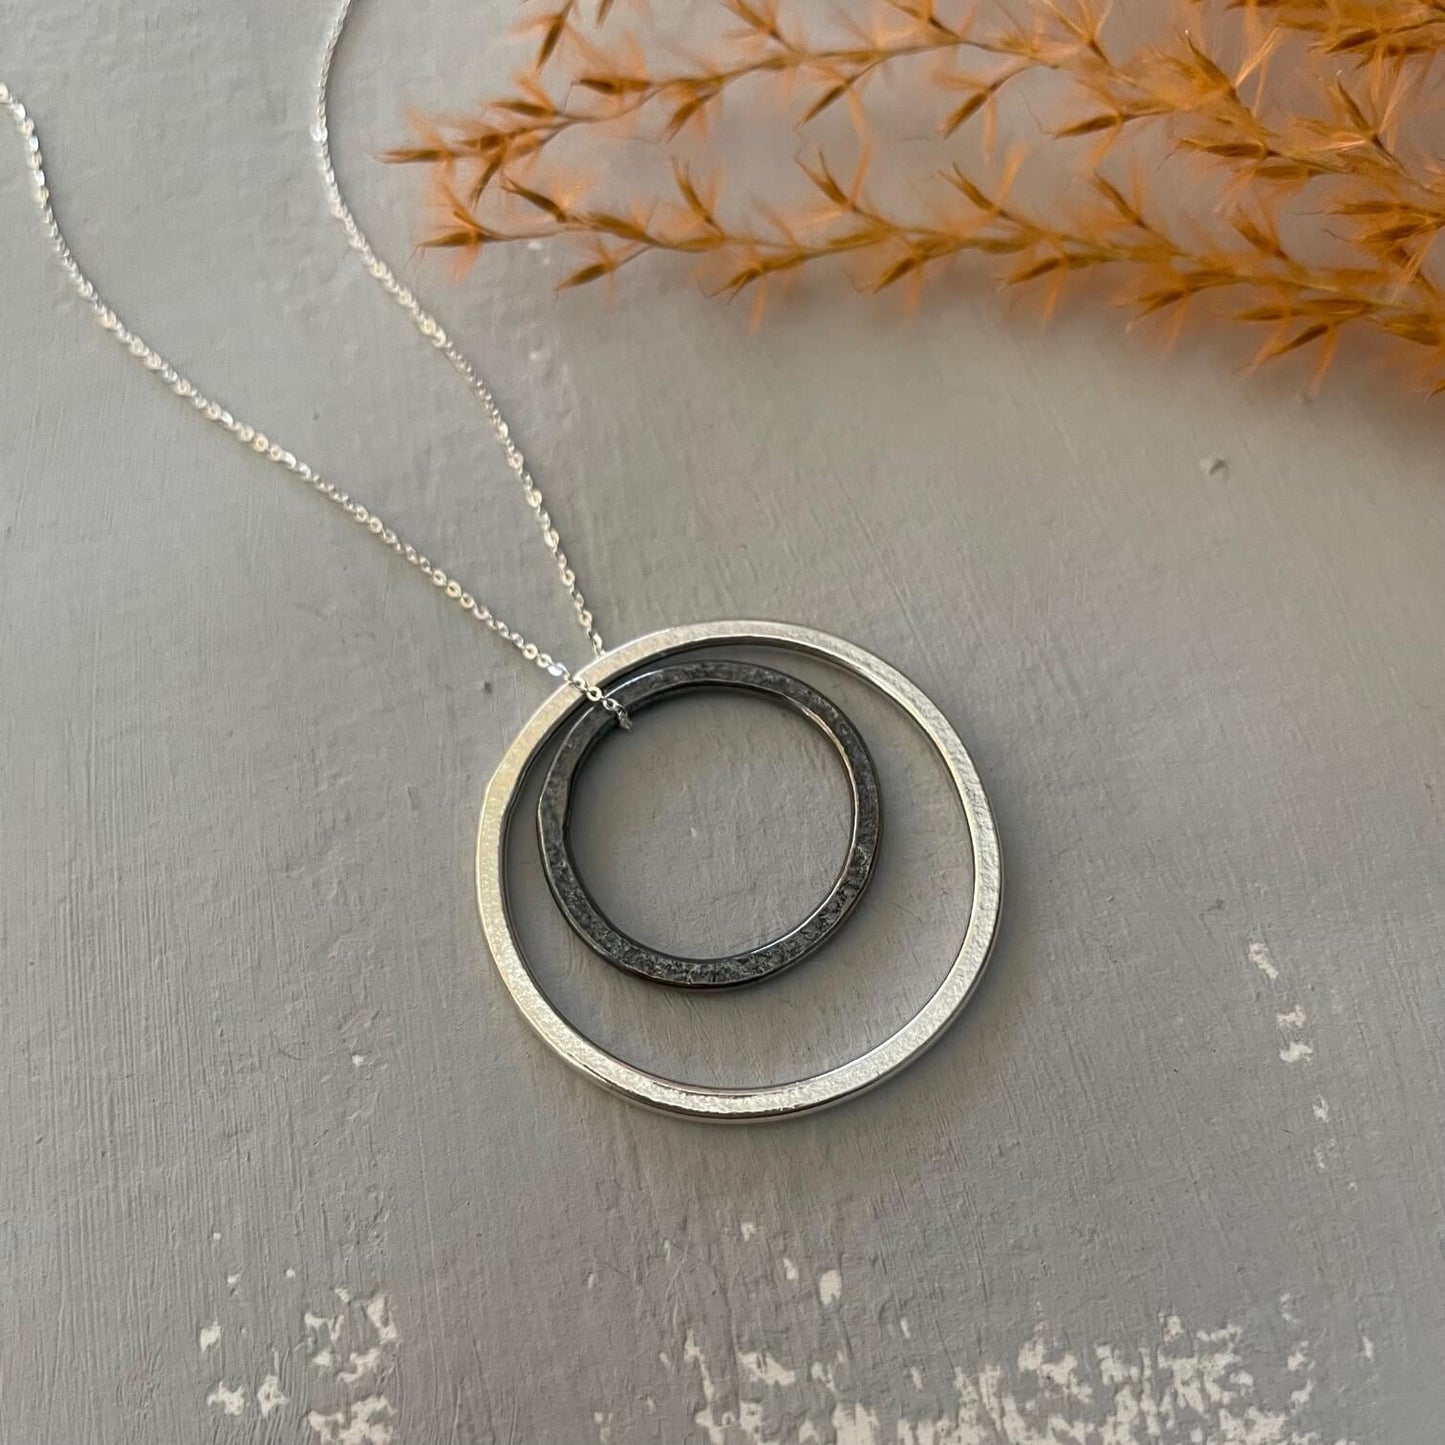 Ava & Bea Necklace Large Lace & Paper Print Silver Circle Pendant